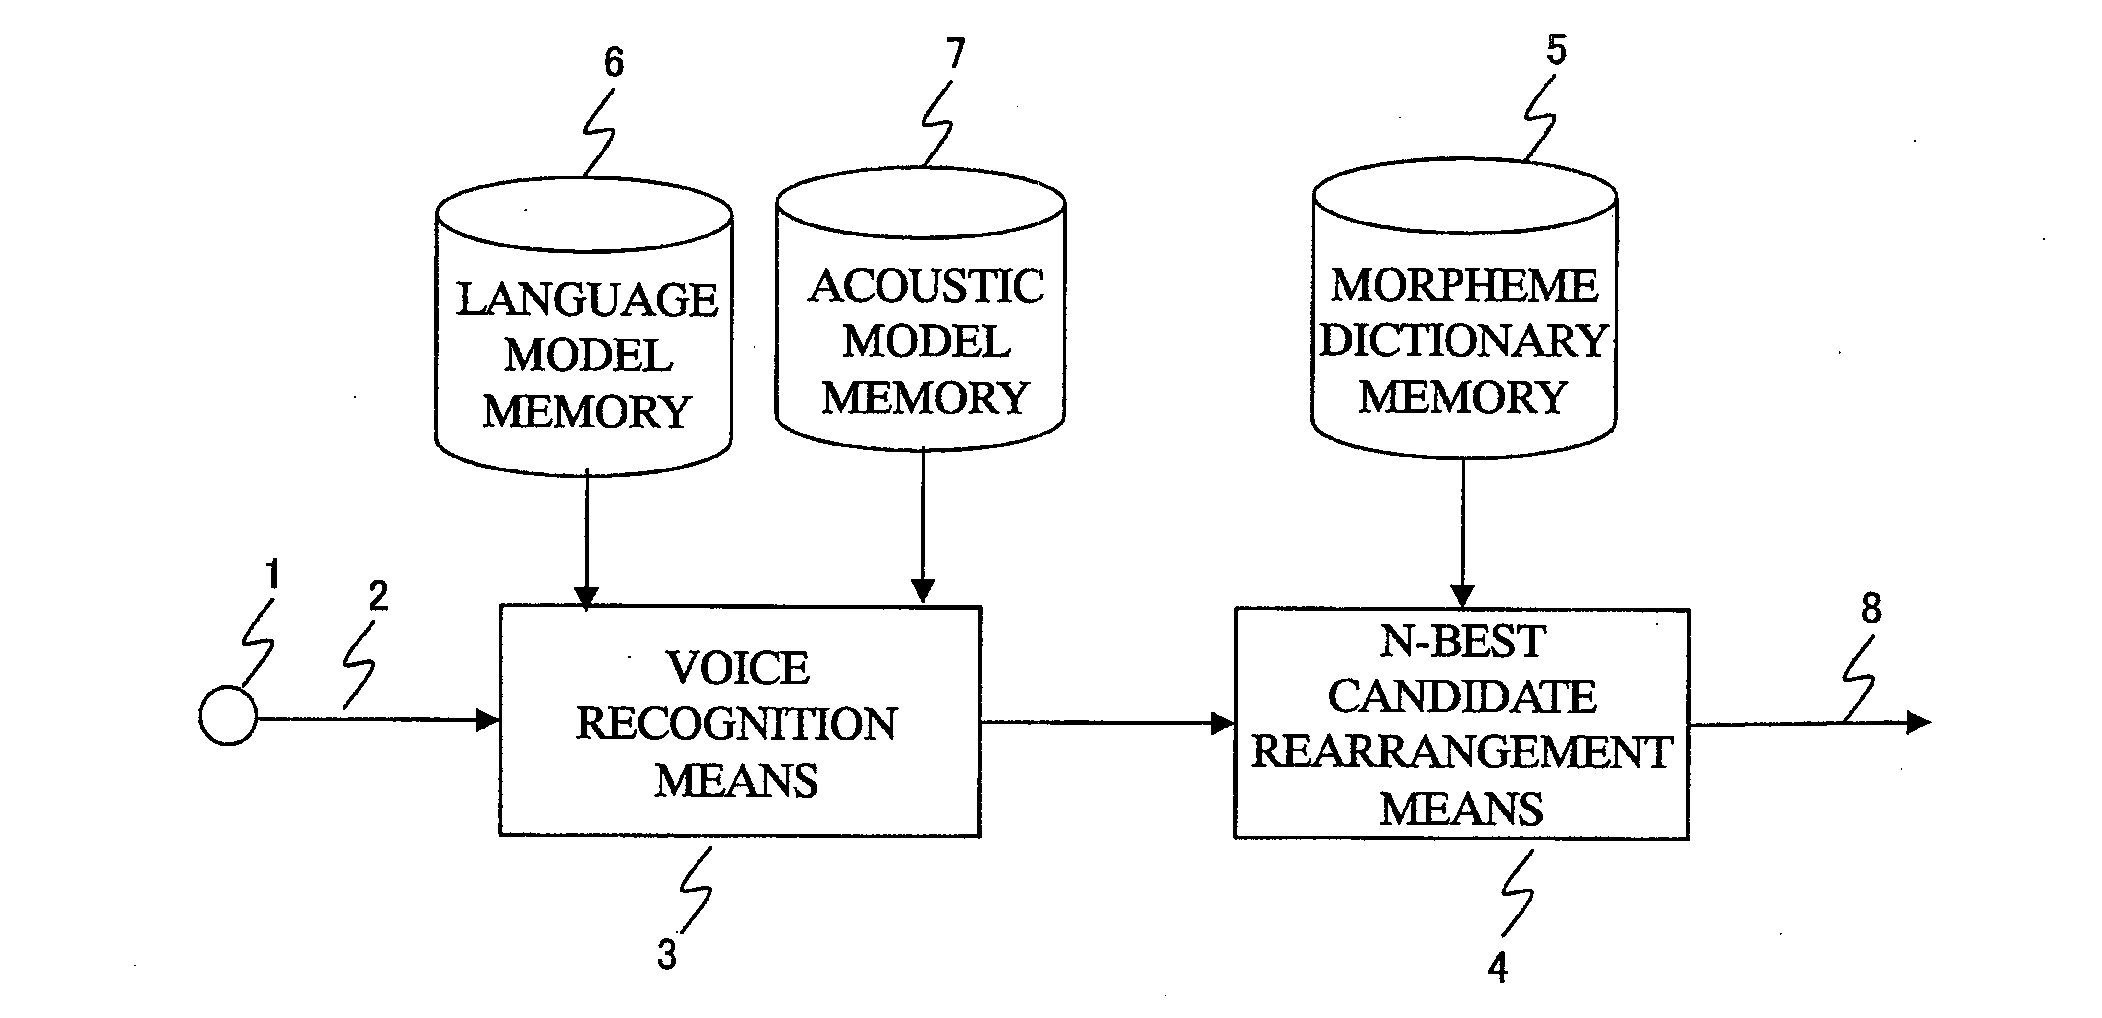 Voice recognition device